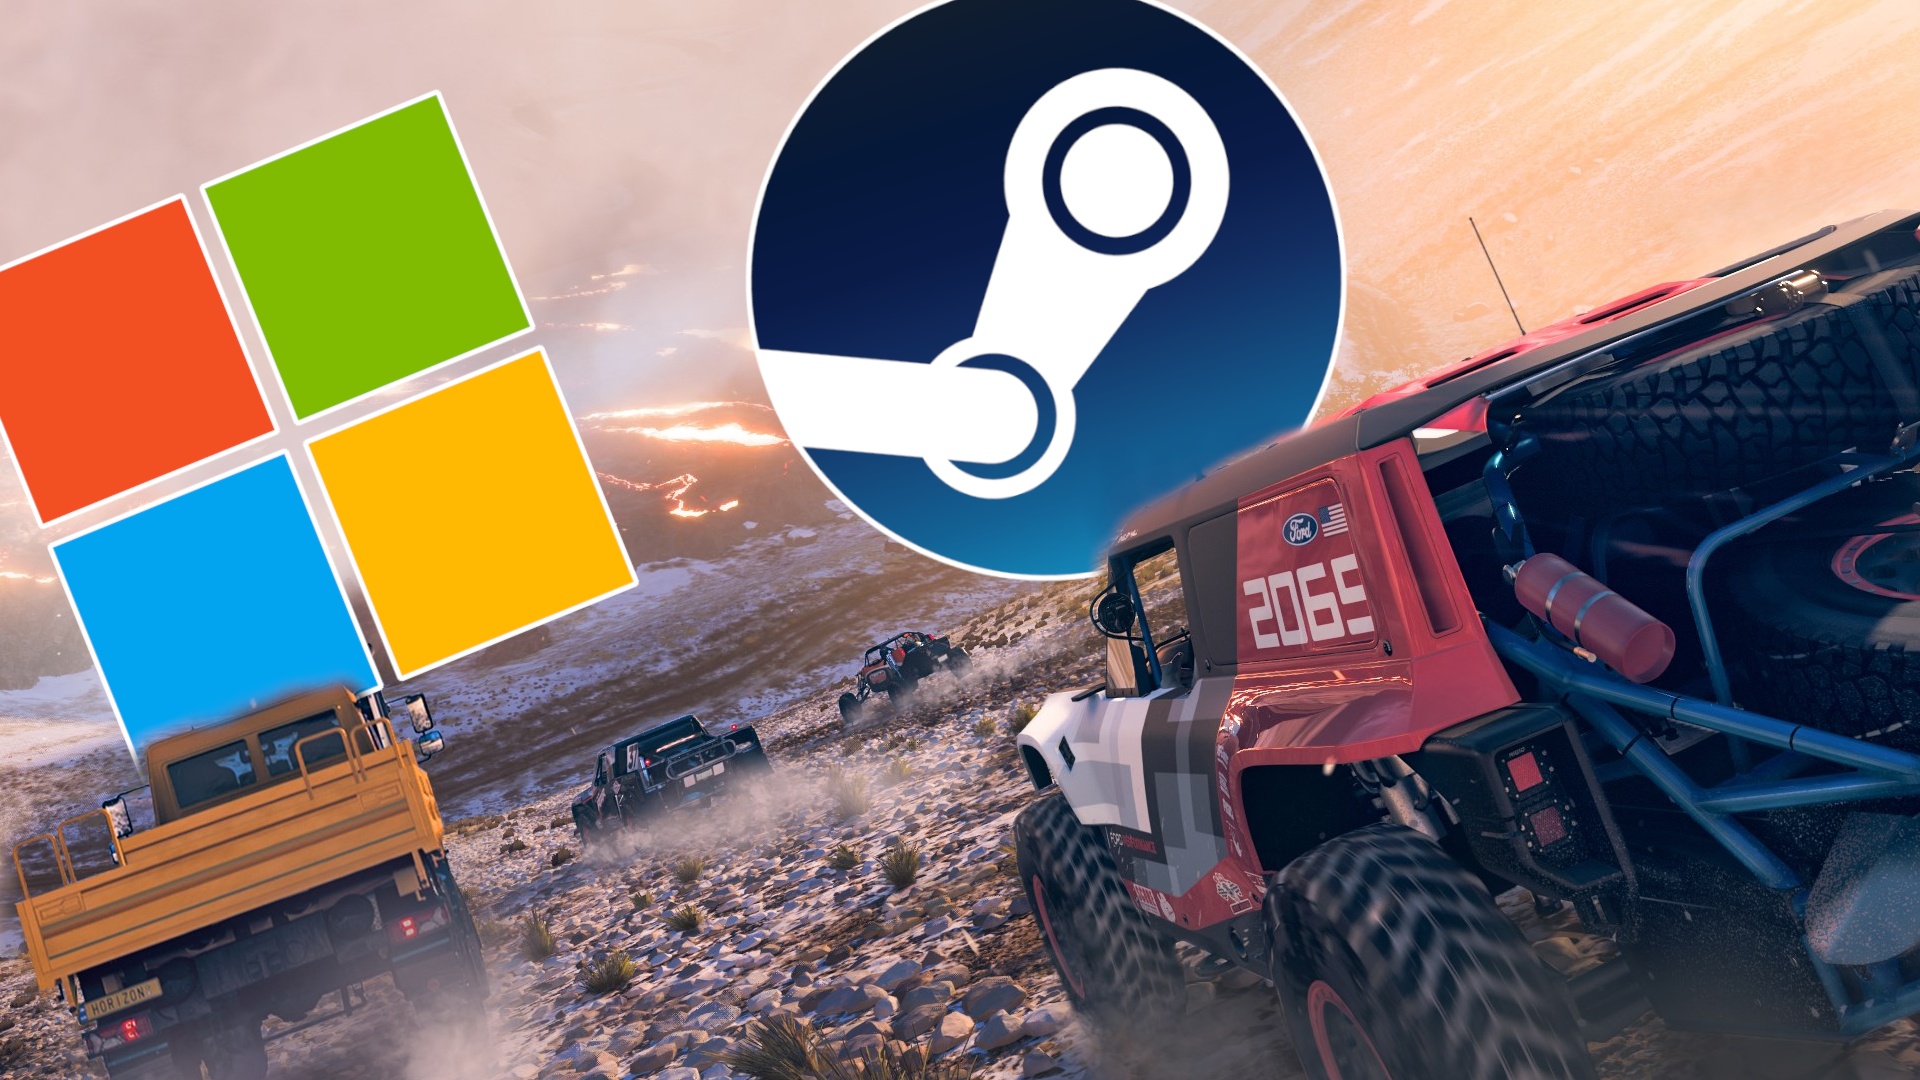 Kaufe Forza Horizon 5 – ''Formula Drift''-Paket (PC / Xbox ONE